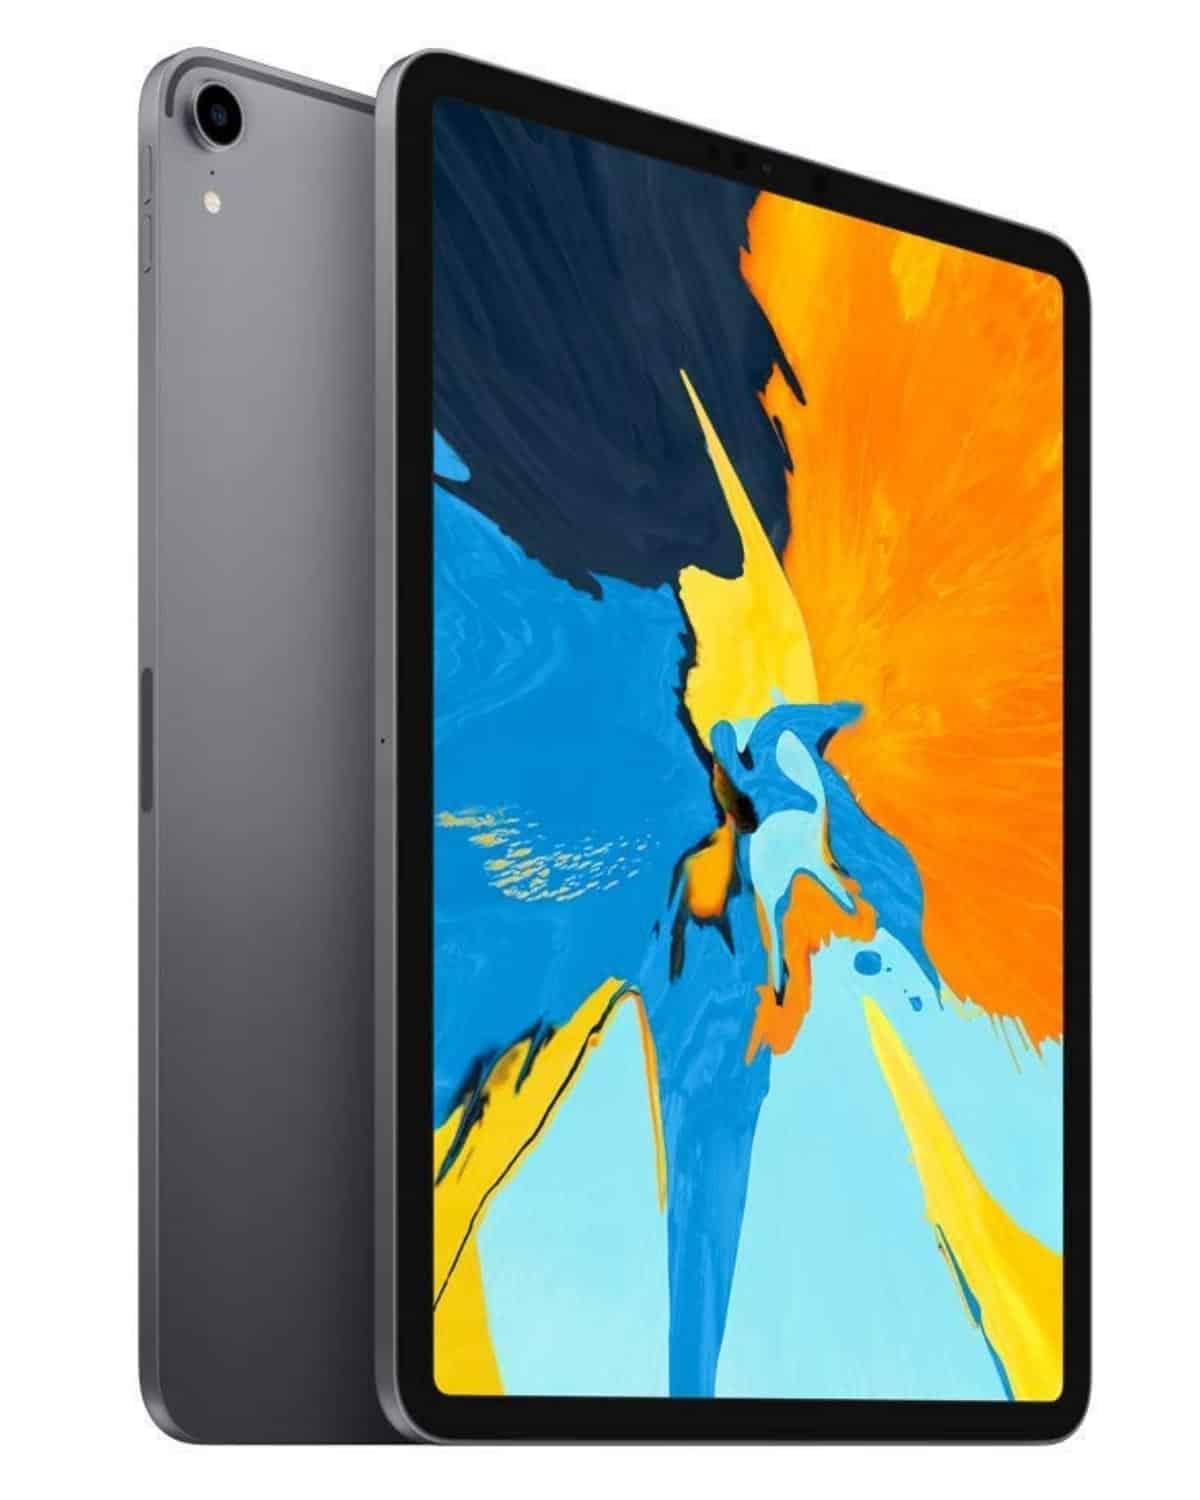 iPad Pro 11-inch | The New Apple iPad Lineup